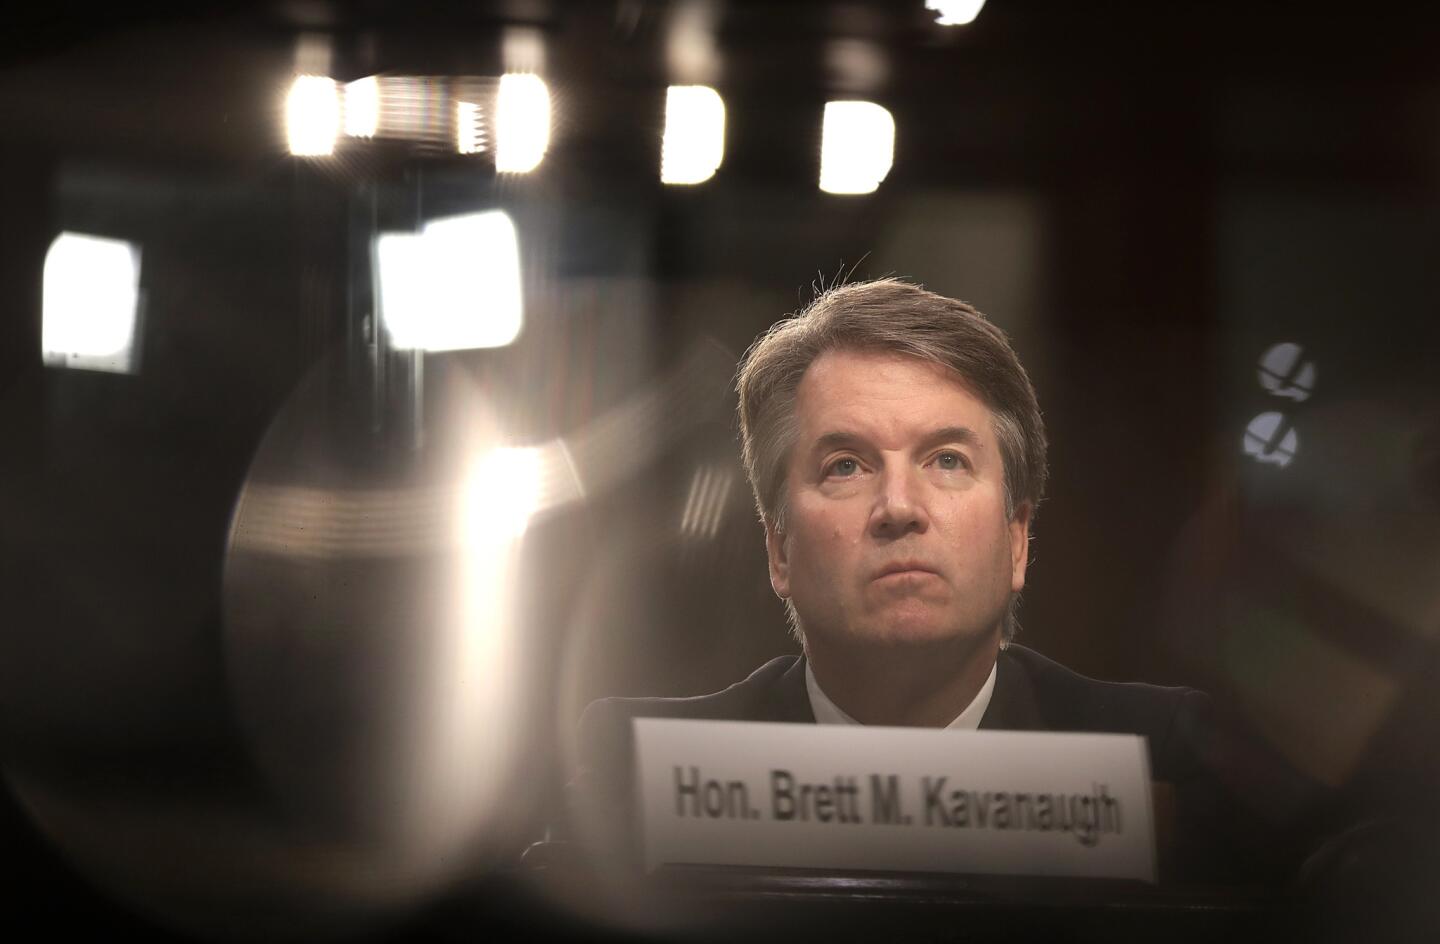 Hearings underway for Supreme Court nominee Brett Kavanaugh